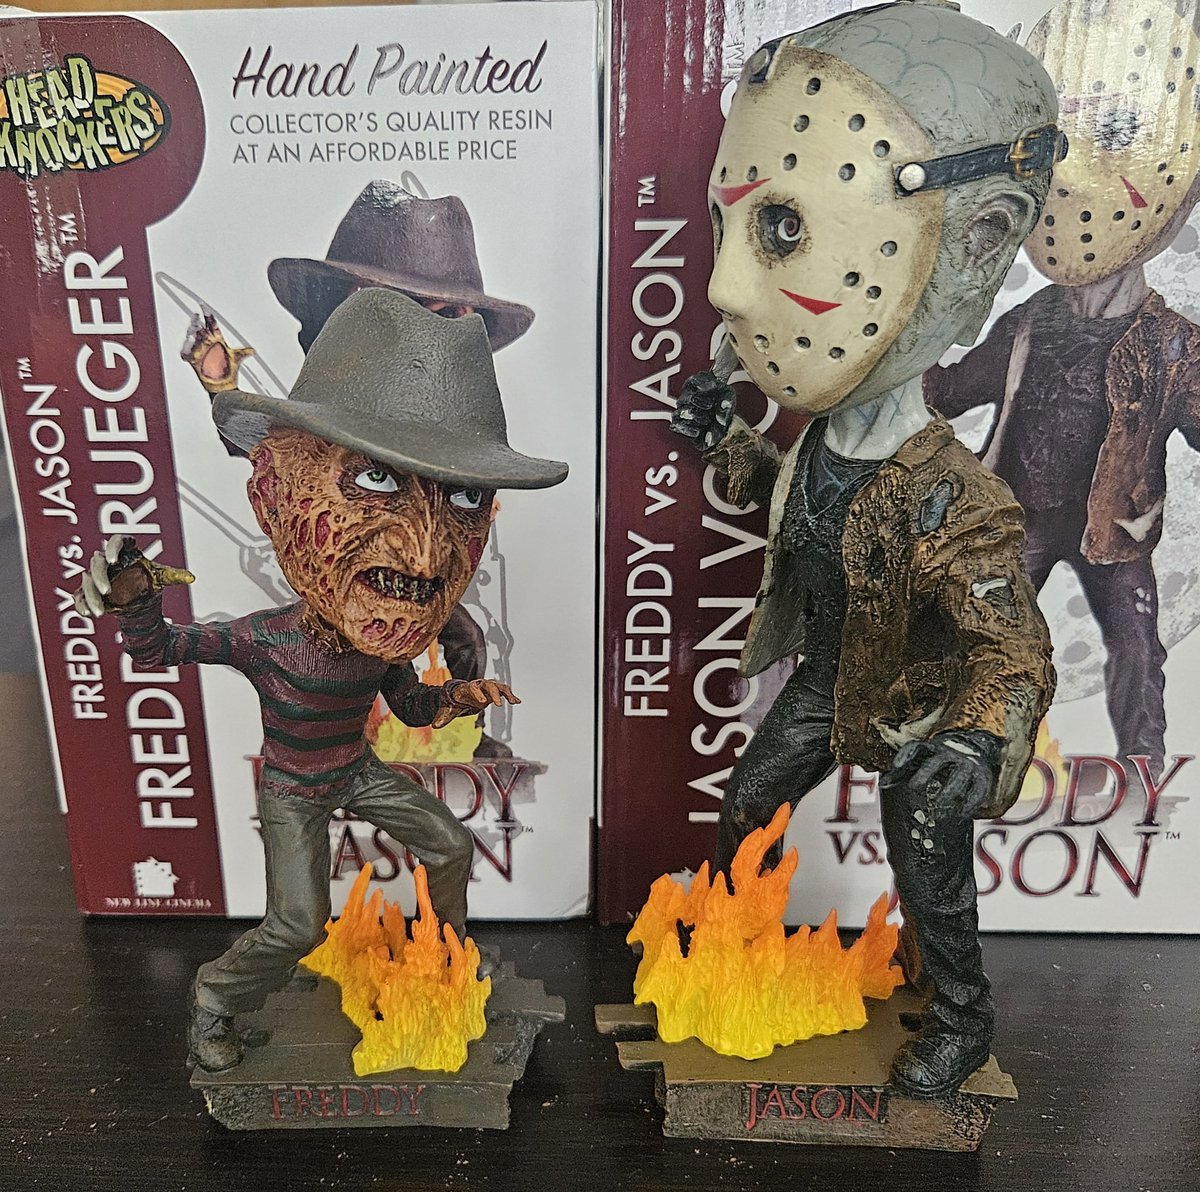 Got the Freddy and Jason Head Knockers to go with the figures! 😁 #FreddyVsJason #FreddyKrueger #JasonVoorhees #ANightmareOnElmStreet #FridayThe13th #Horror #NECA